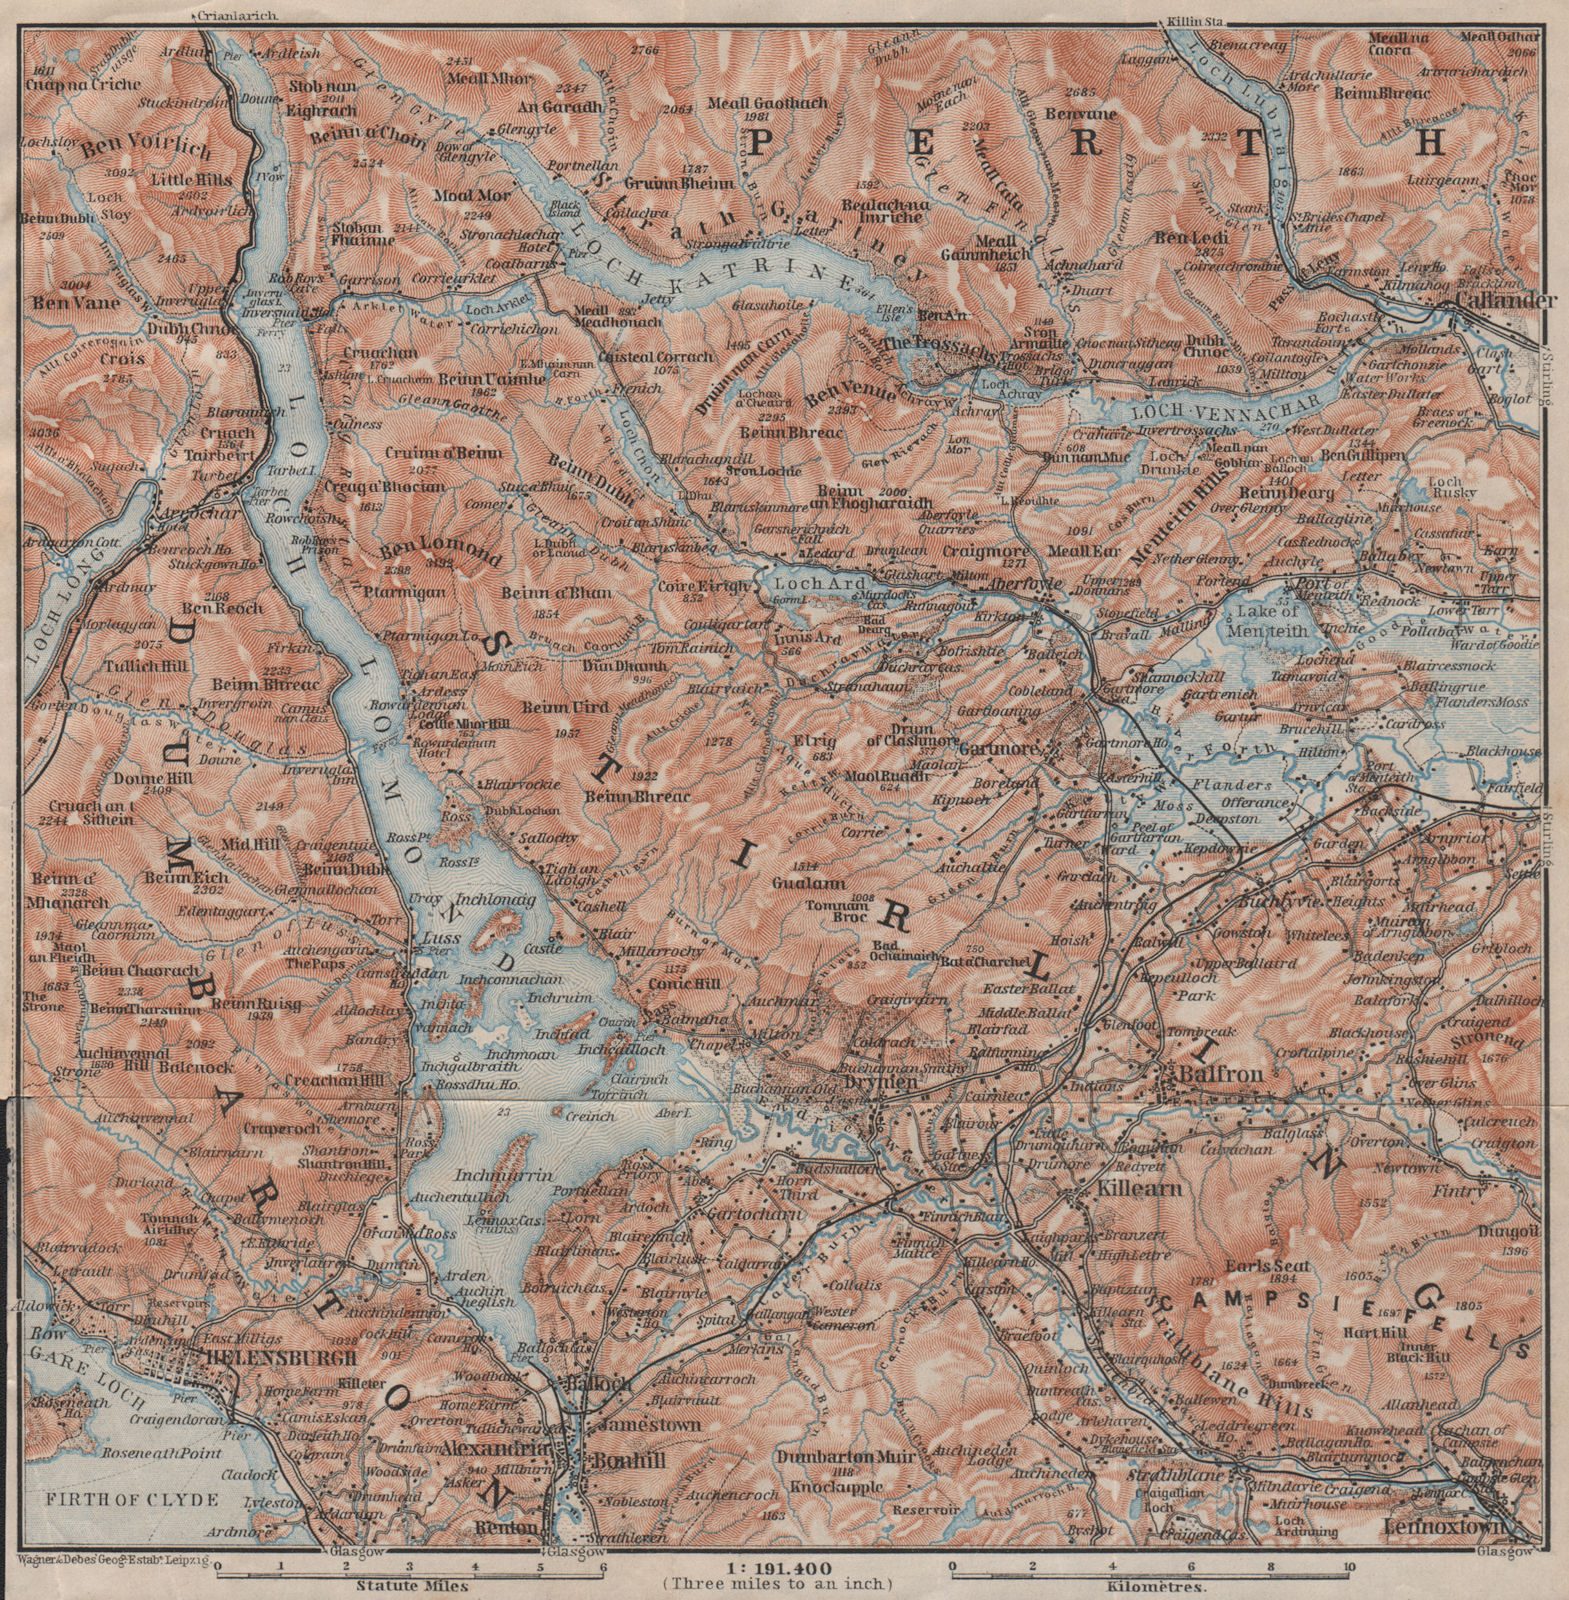 LOCH LOMOND & THE TROSSACHS. Helensburgh Balloch Drymen. Scotland 1906 old map